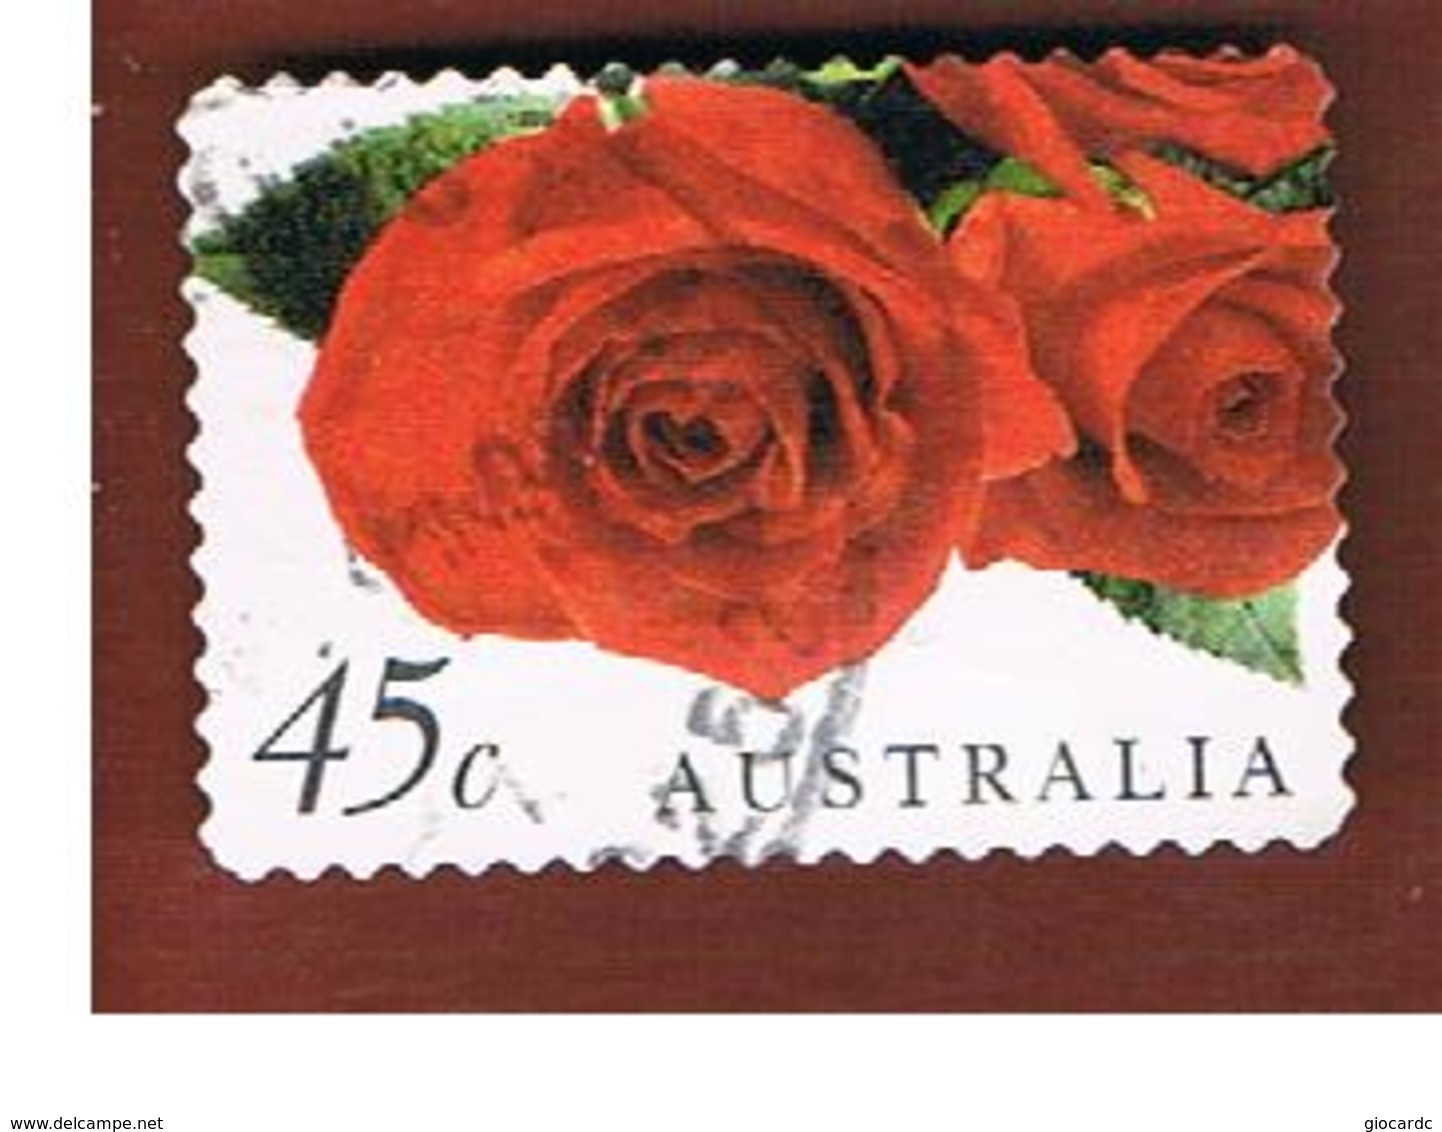 AUSTRALIA  -  SG 1843  -      1999 RED ROSES  -       USED - Usados